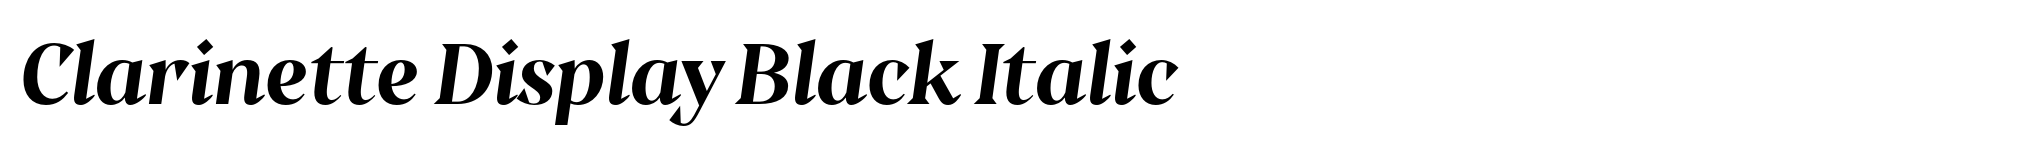 Clarinette Display Black Italic image